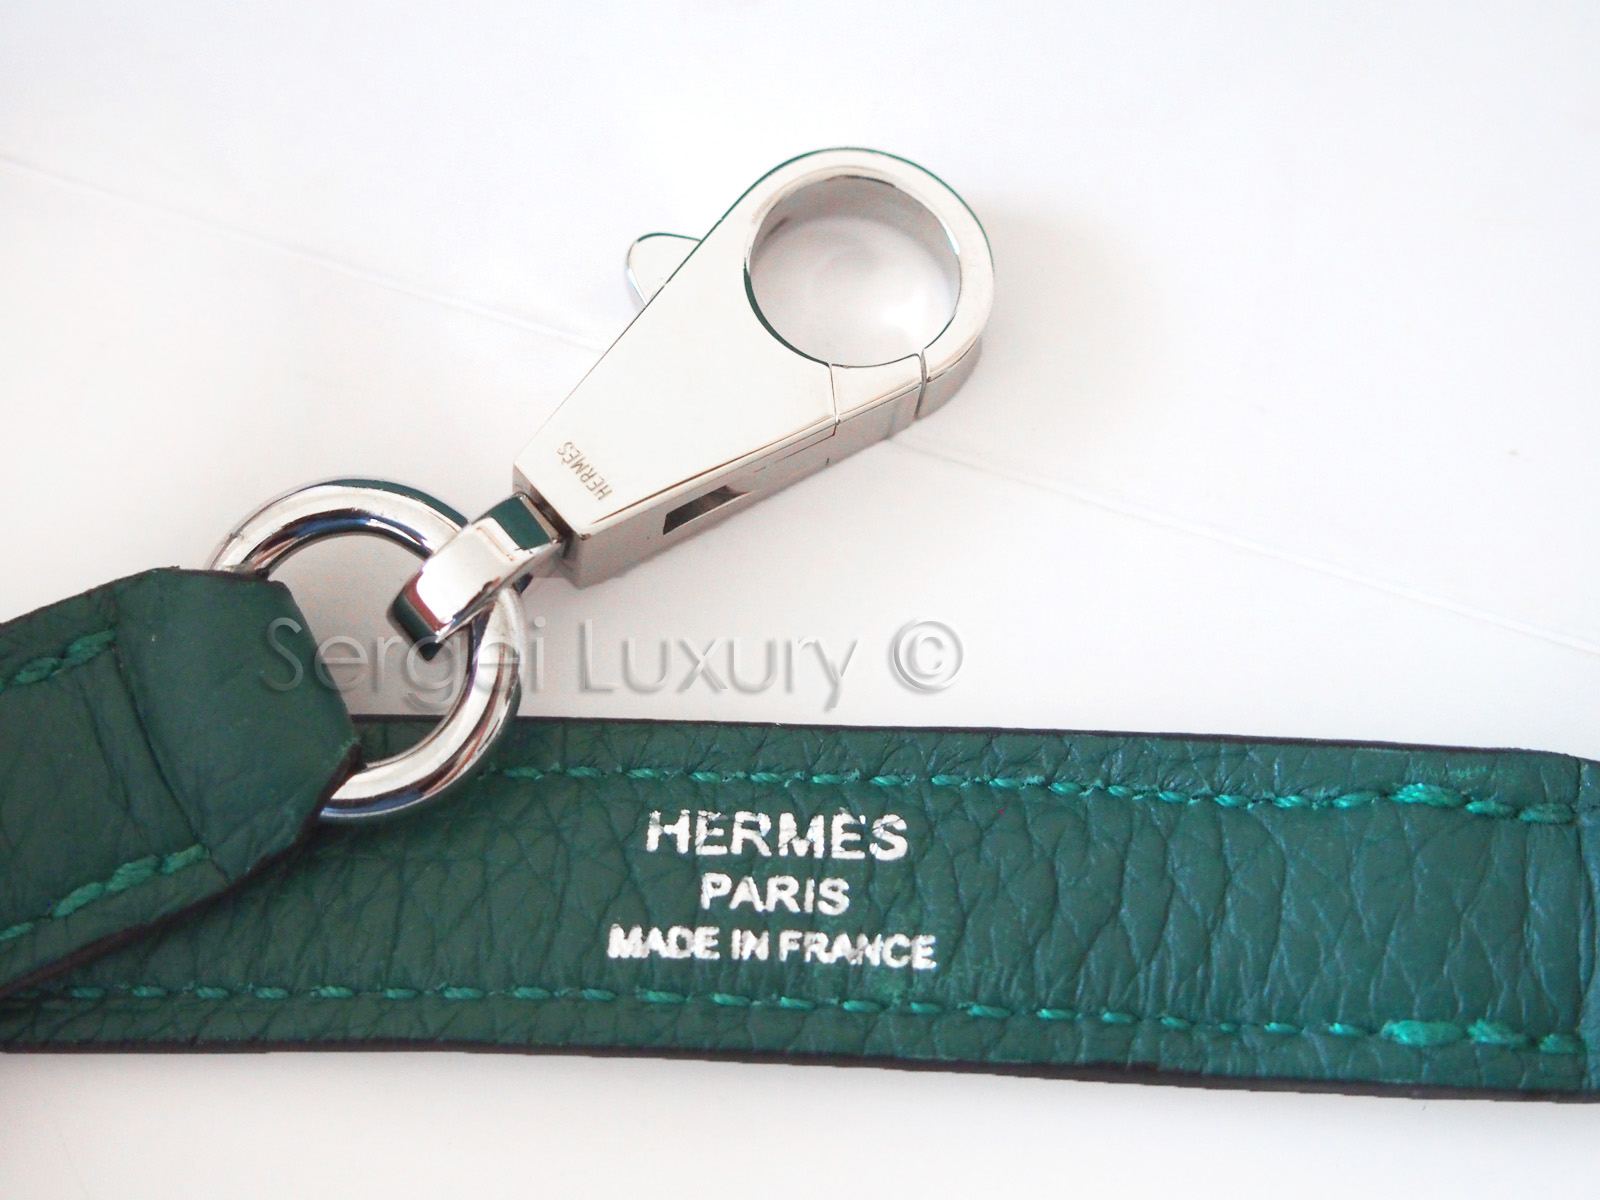 Regal NEW Authentic HERMES Malachite Green Kelly bag 32 cm PHW Togo —  Sergei Luxury